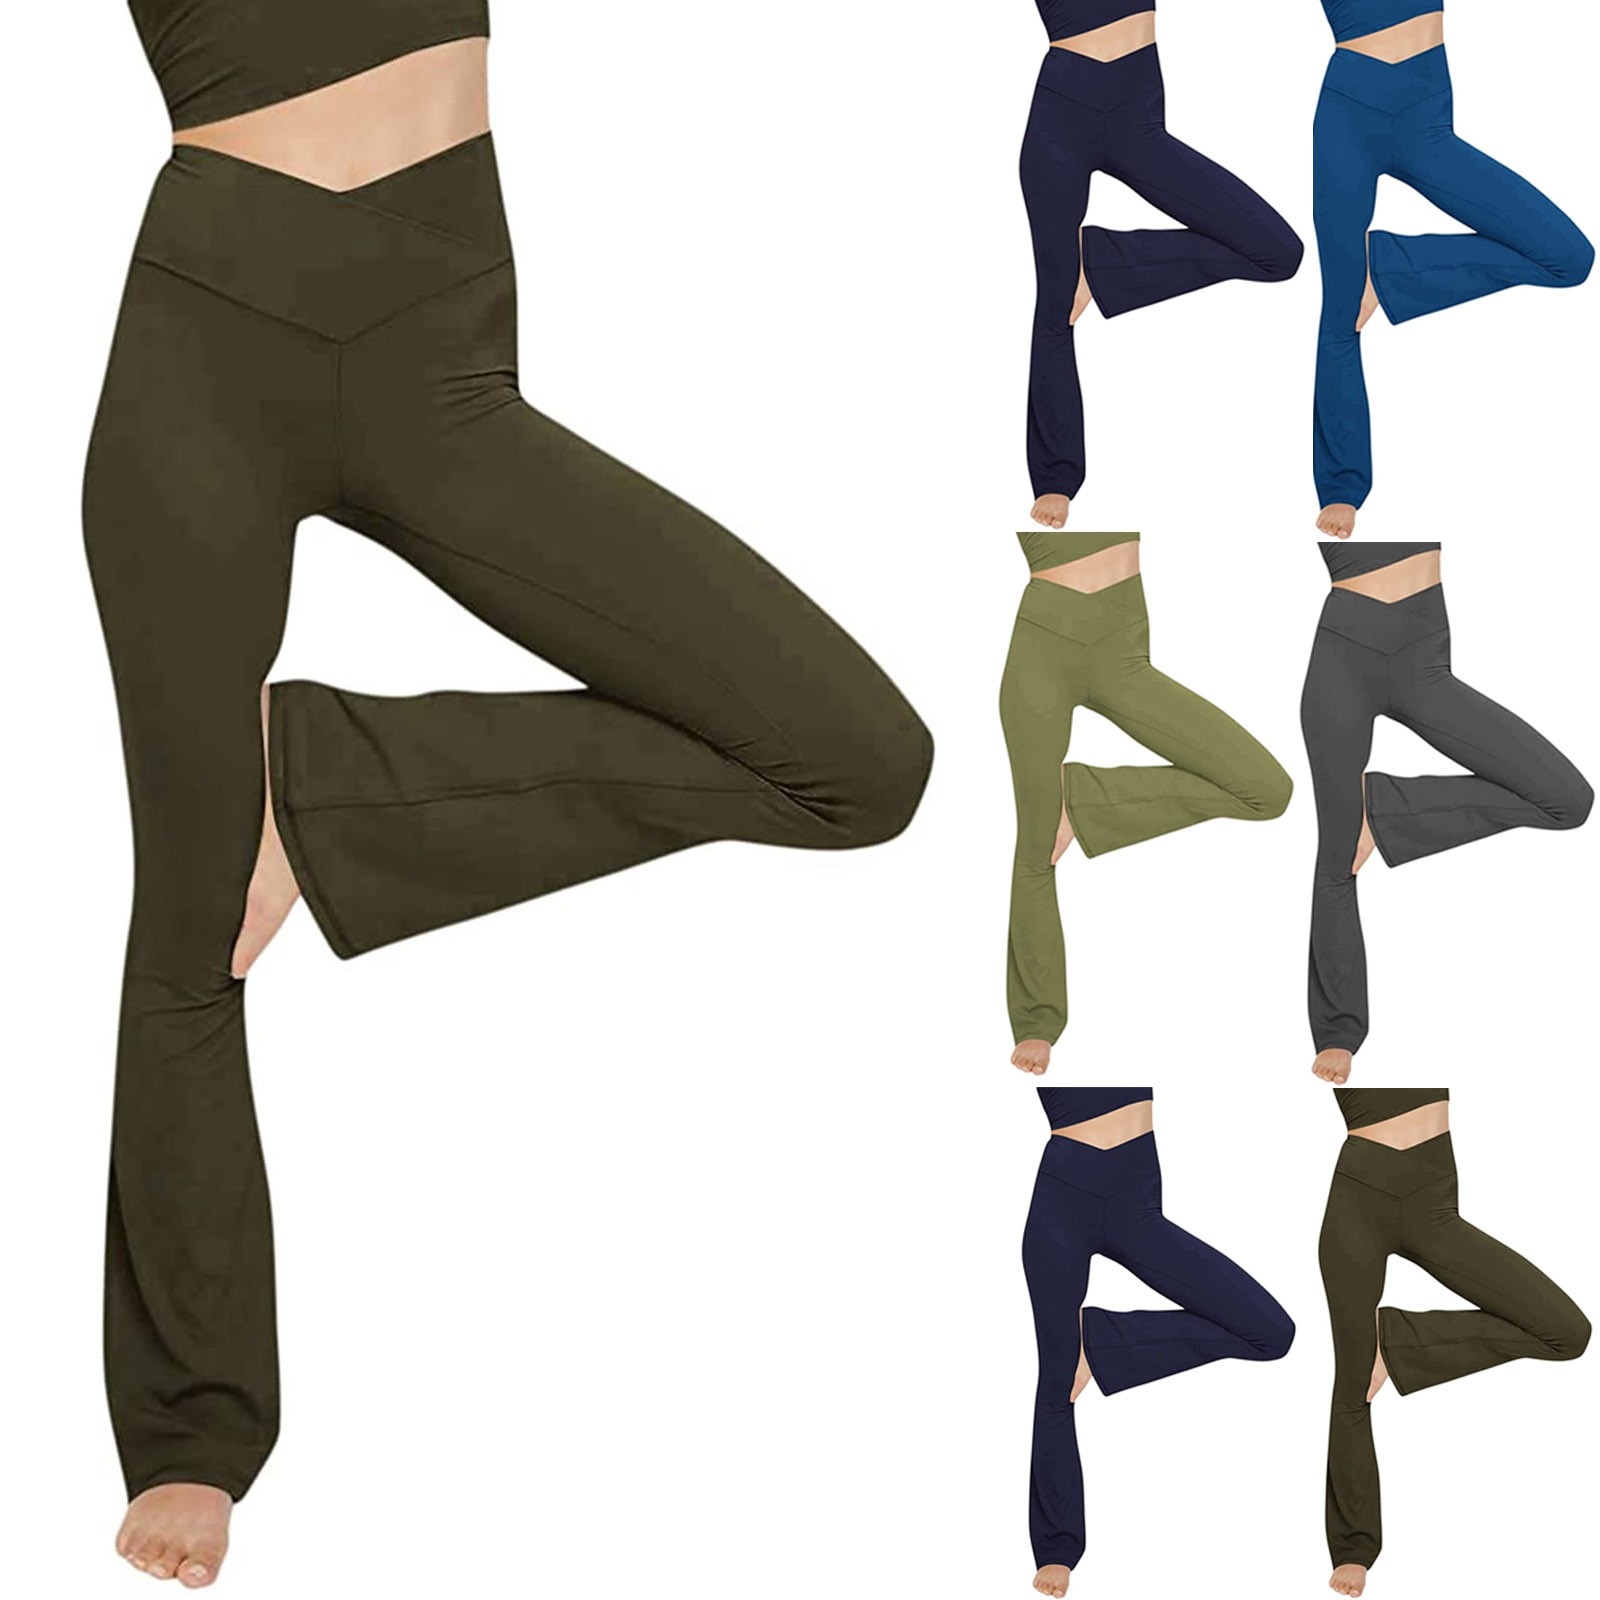 Yoga Pants High Waist Push Up Leggings Sport Women Fitness Workout Clothing  Sport Wear Gym Leggins Plus Size Dance Yoga Größe S Farbe army green